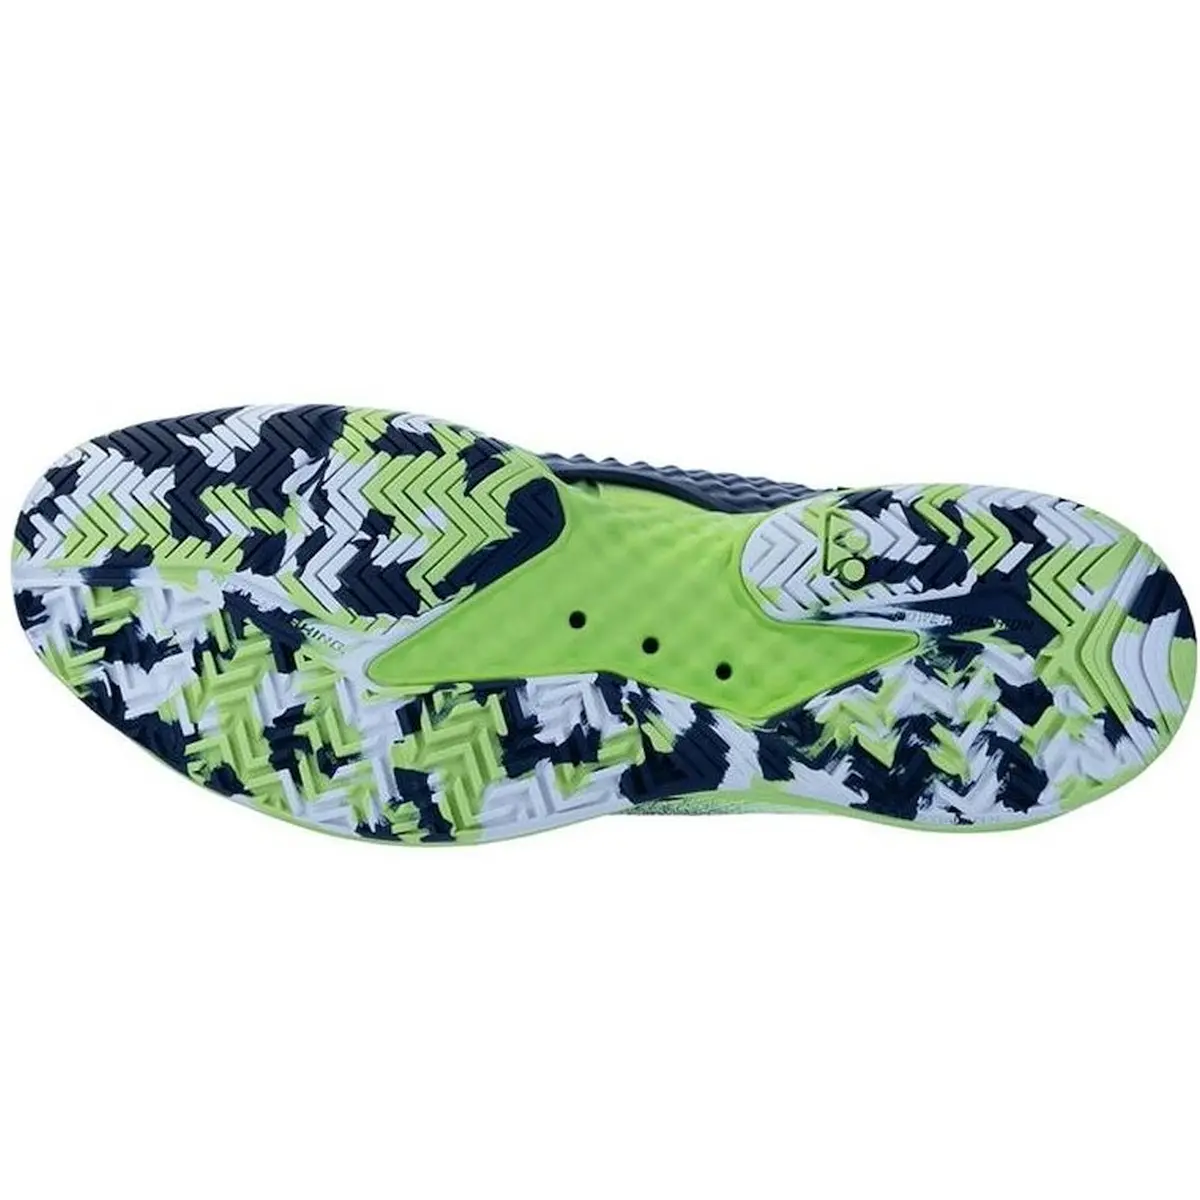 Yonex Men's FusionRev 4 Tennis Shoes (Lime/Navy)